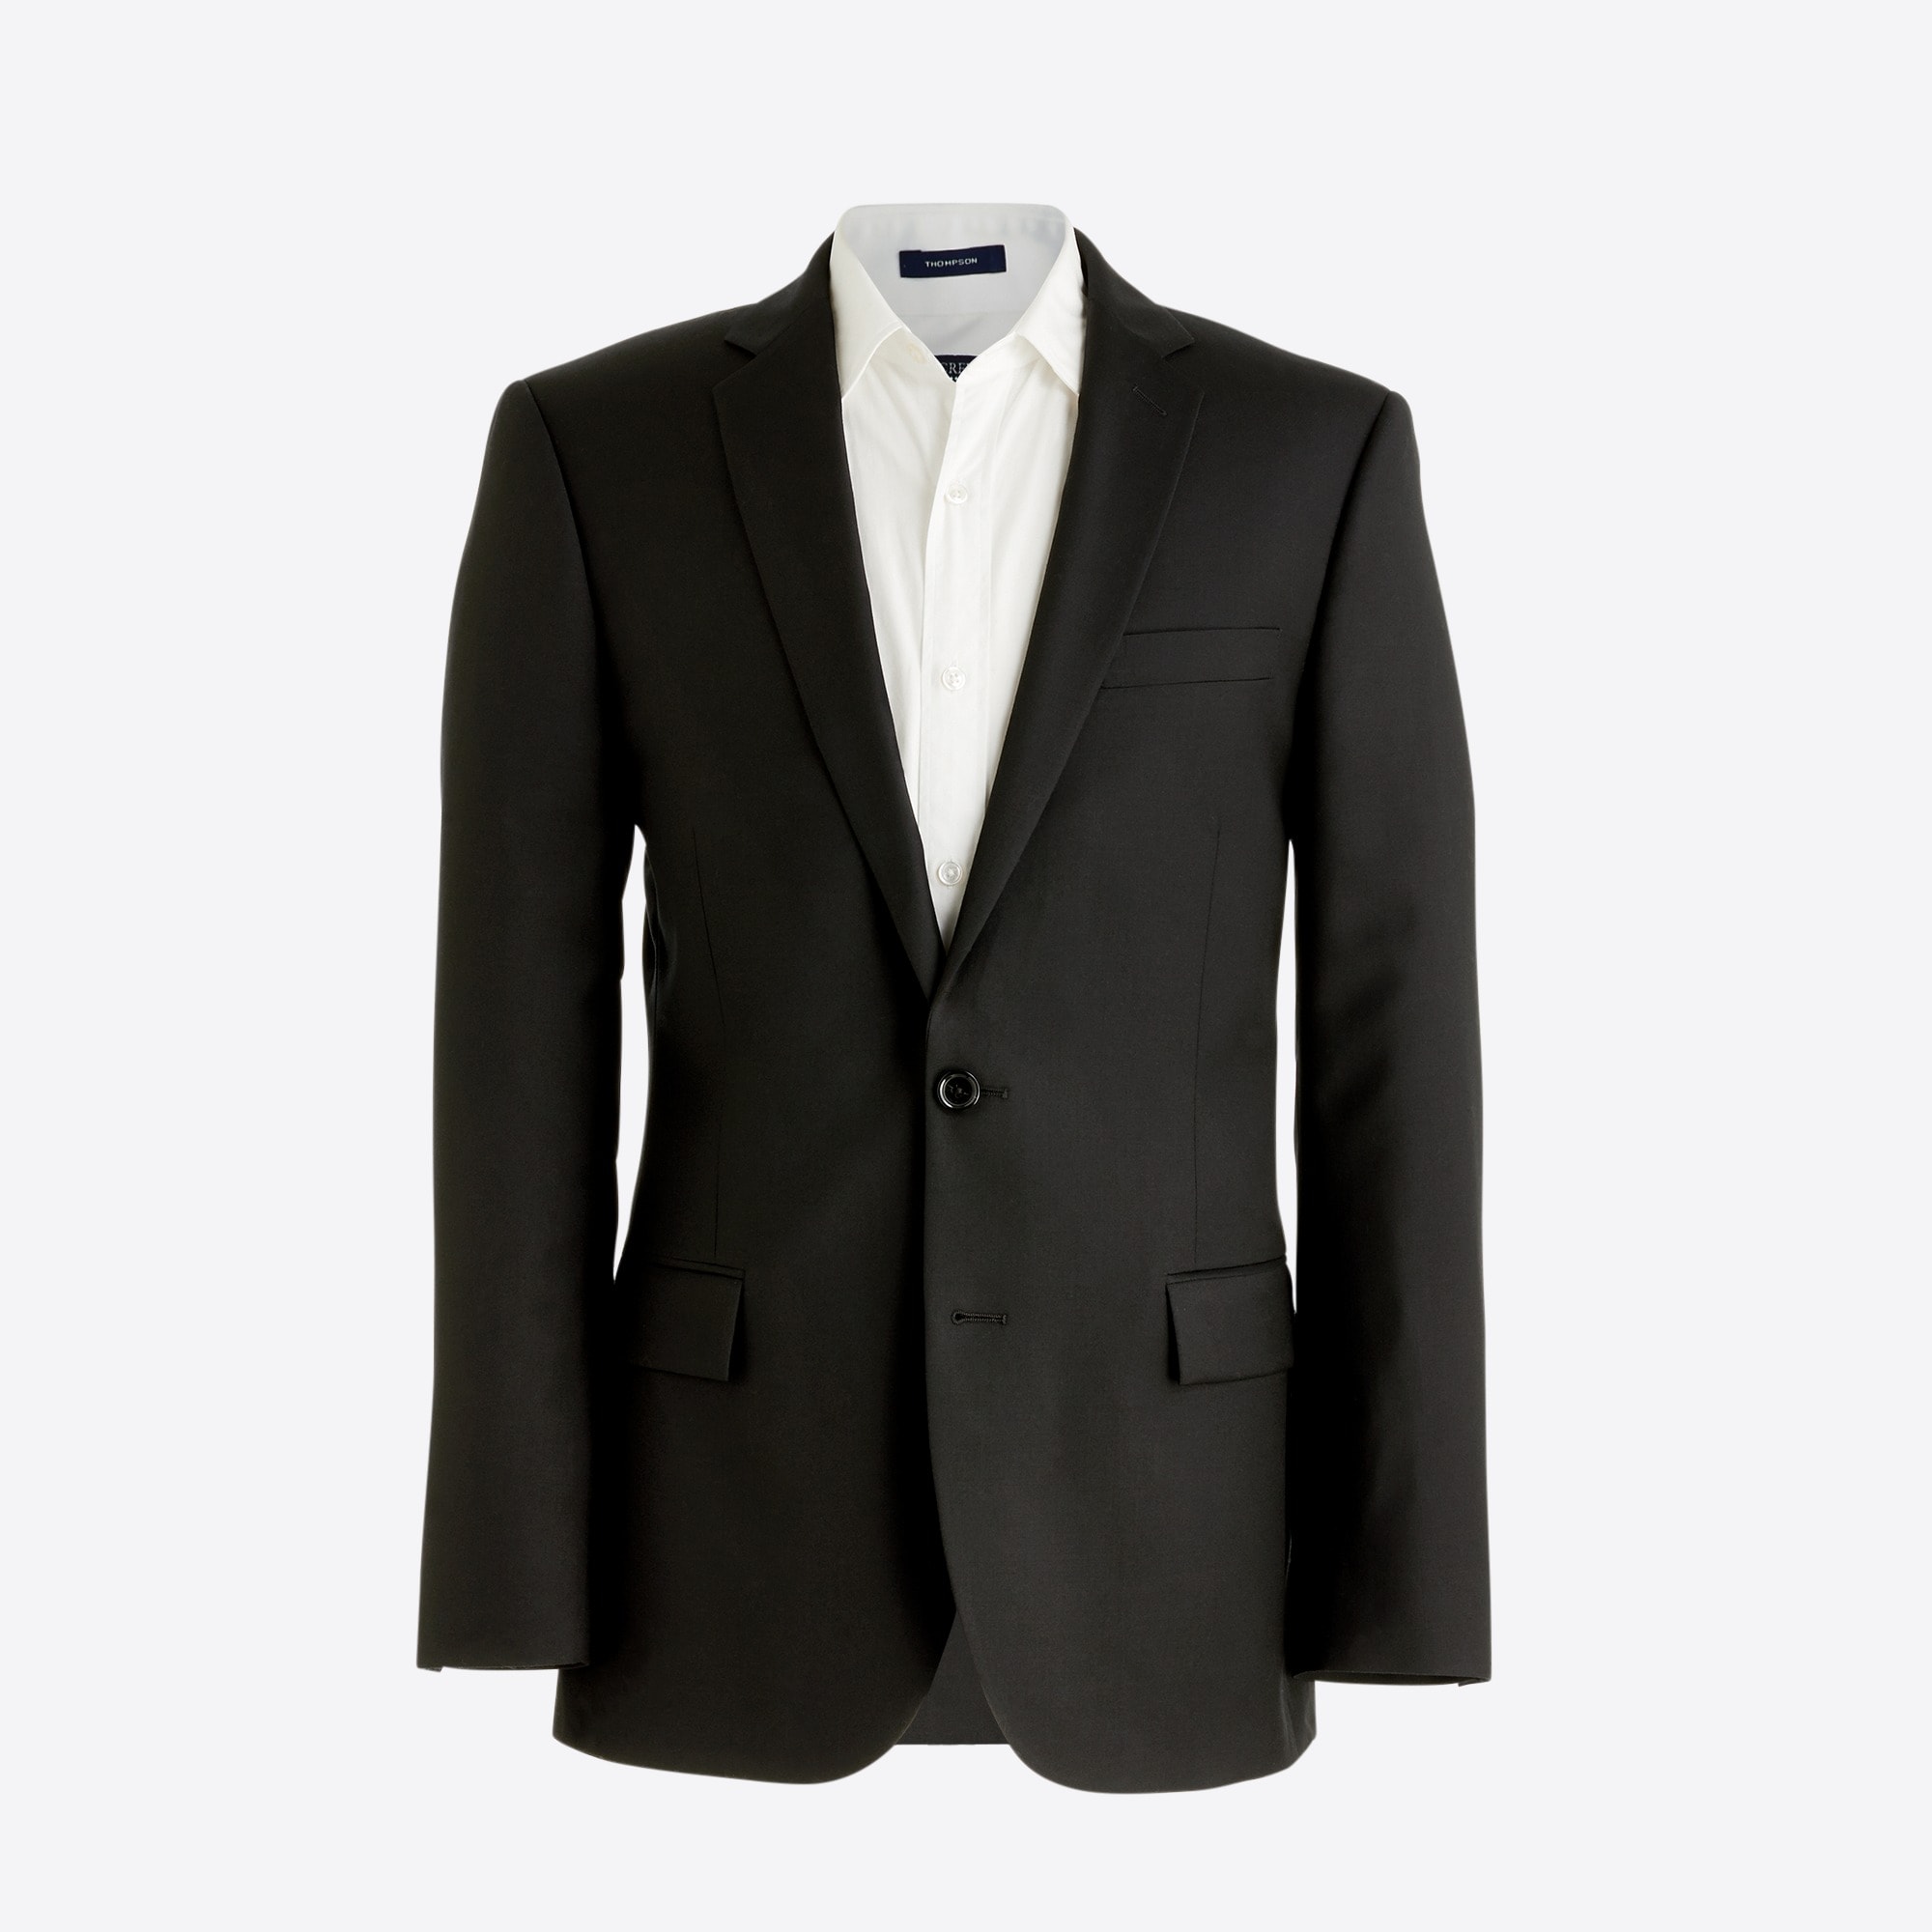  Slim Thompson suit jacket in worsted wool